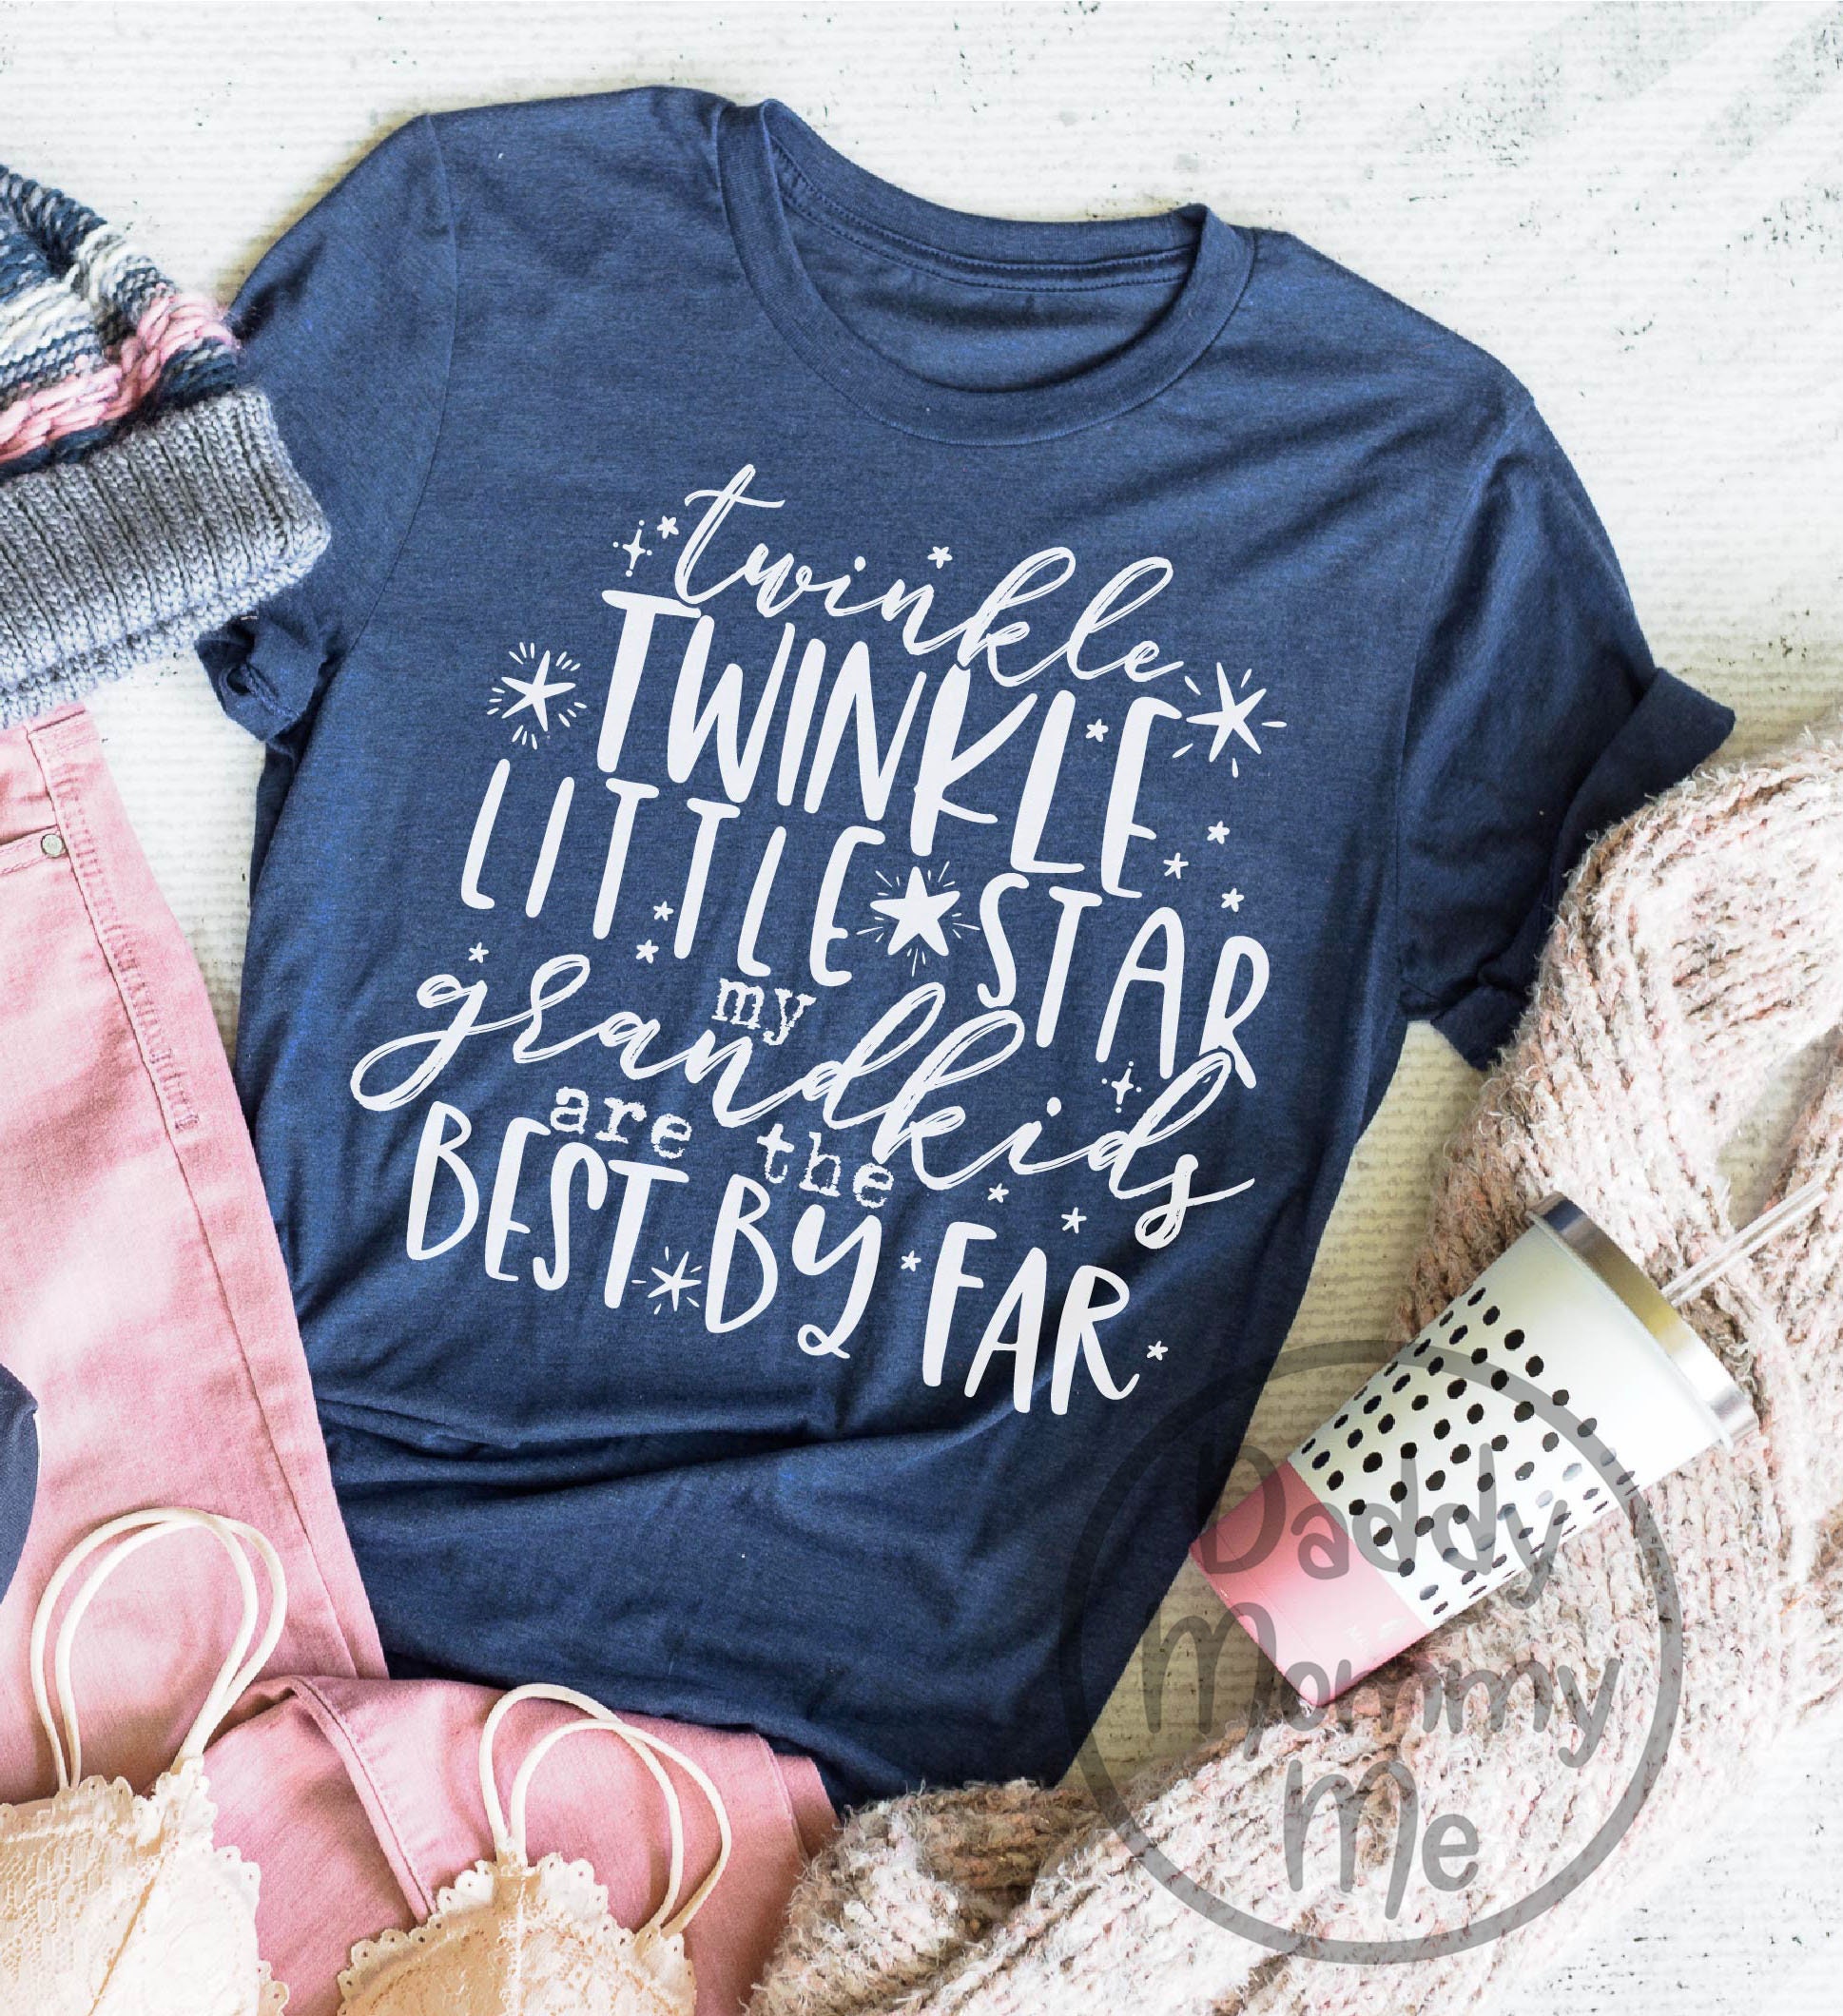 BHTHUI Twinkle Twinkle Little Star Gender Reveal Baby Gift Shower T-Shirt T031120 